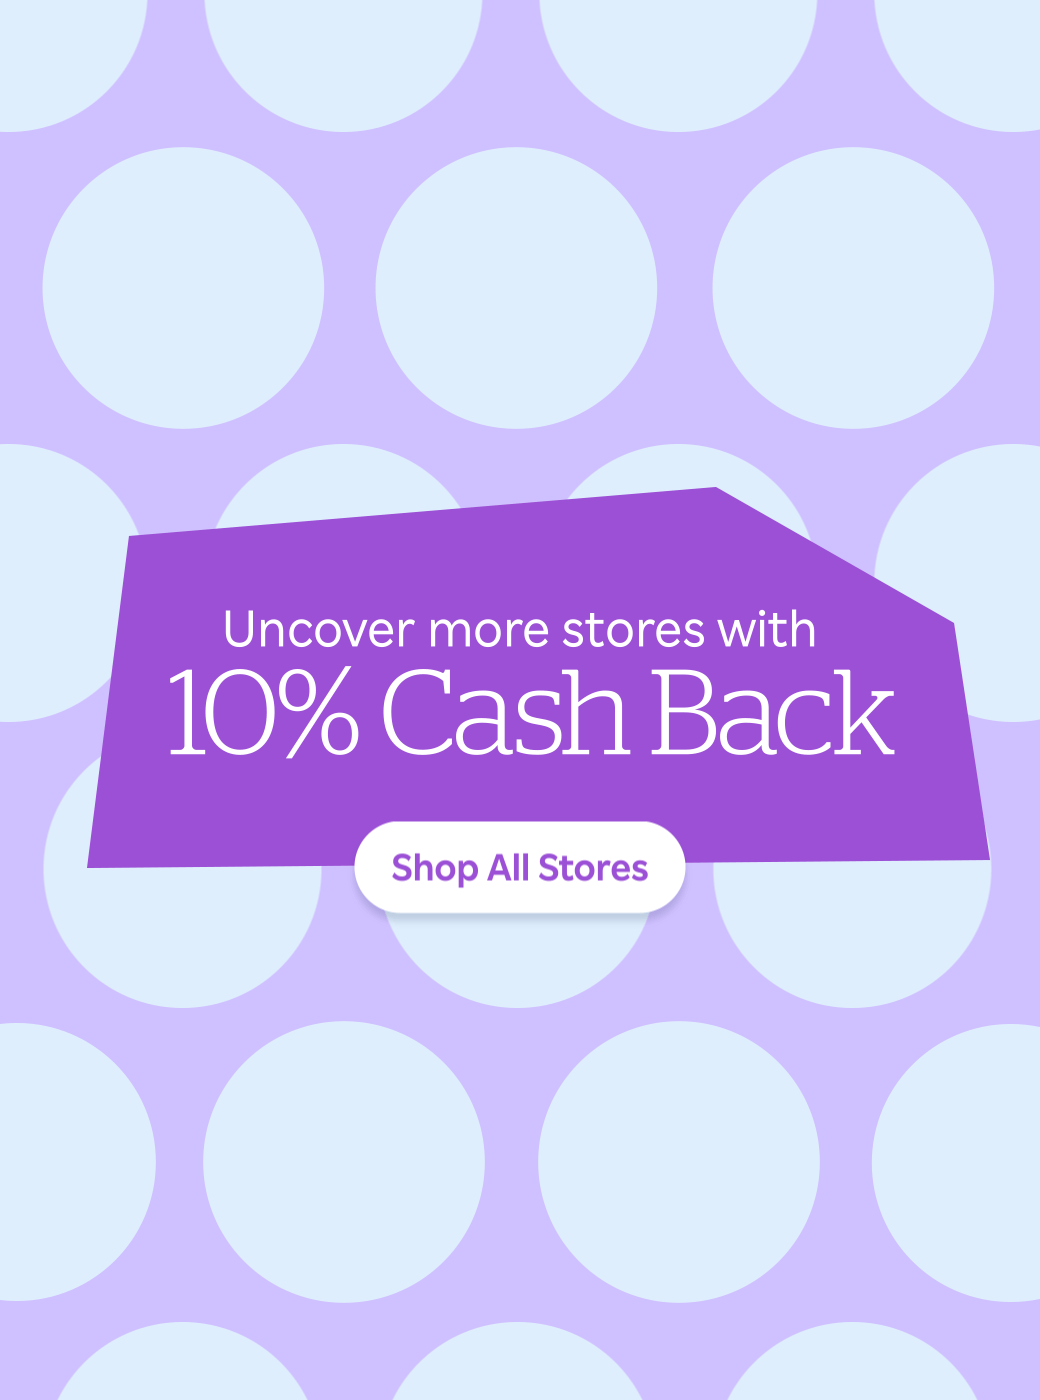 Up to 10% Cash Back